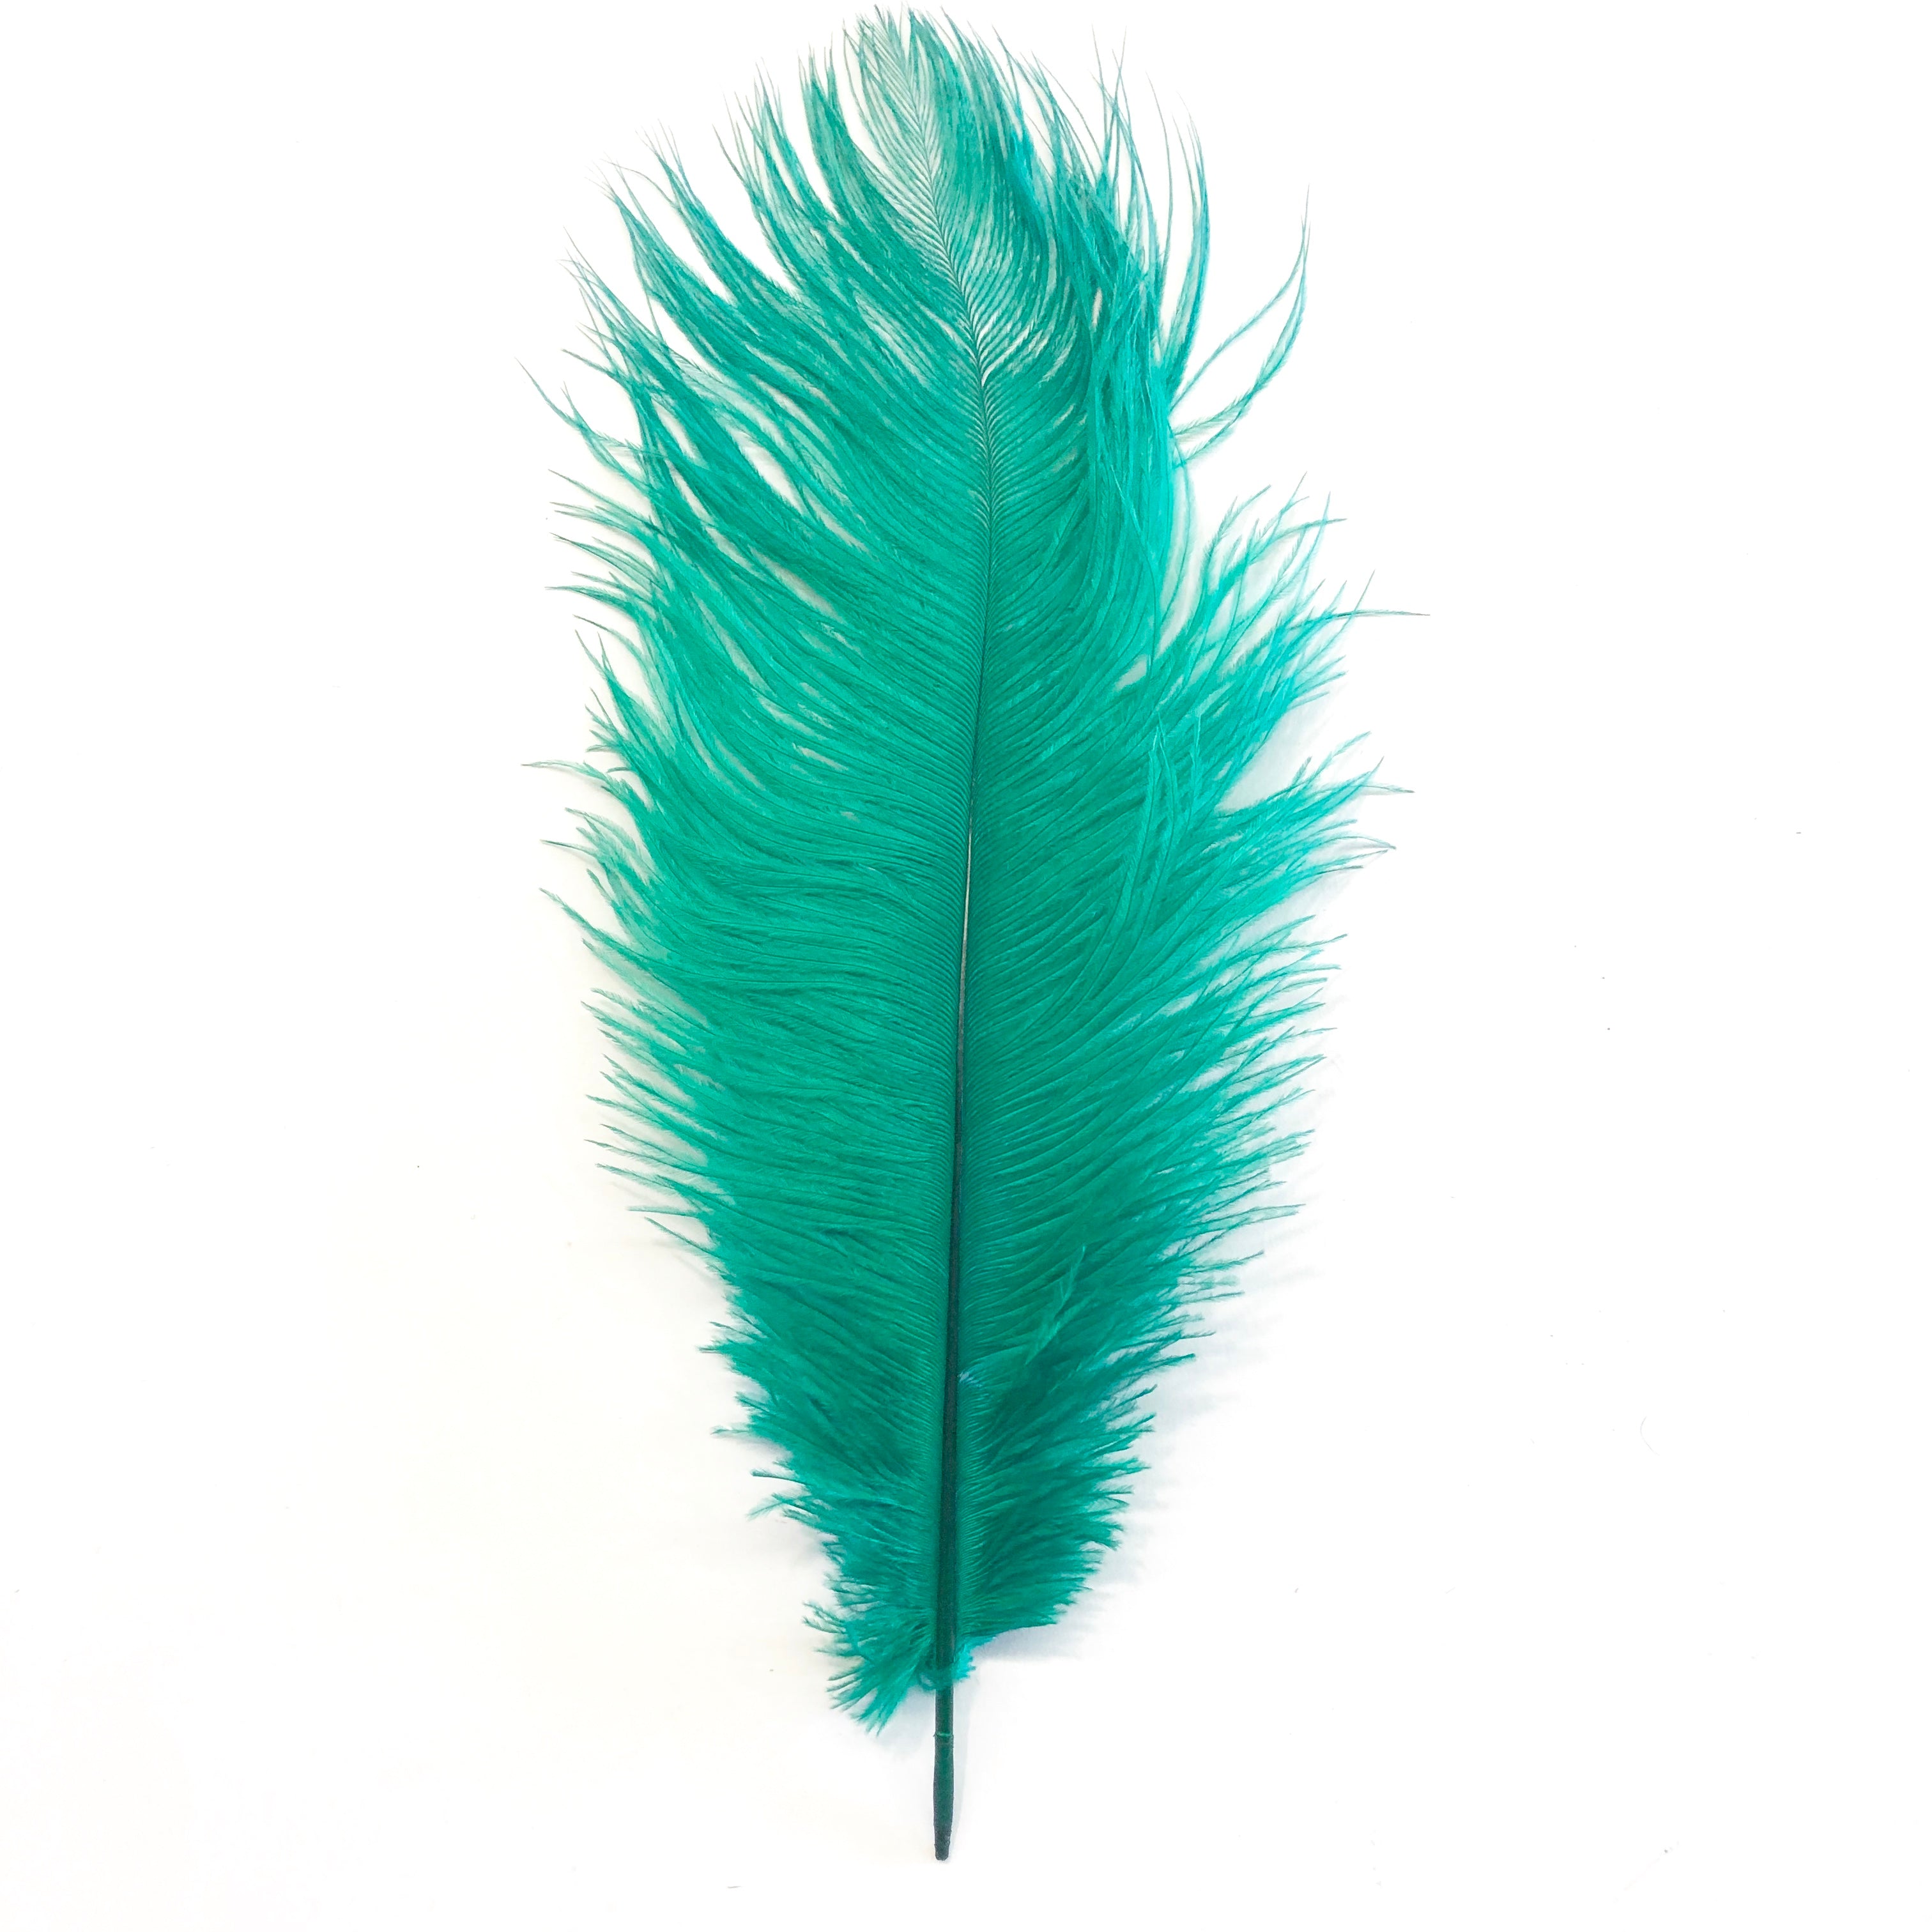 Ostrich Feather Drab 37-42cm x 5 pcs - Green ((SECONDS))